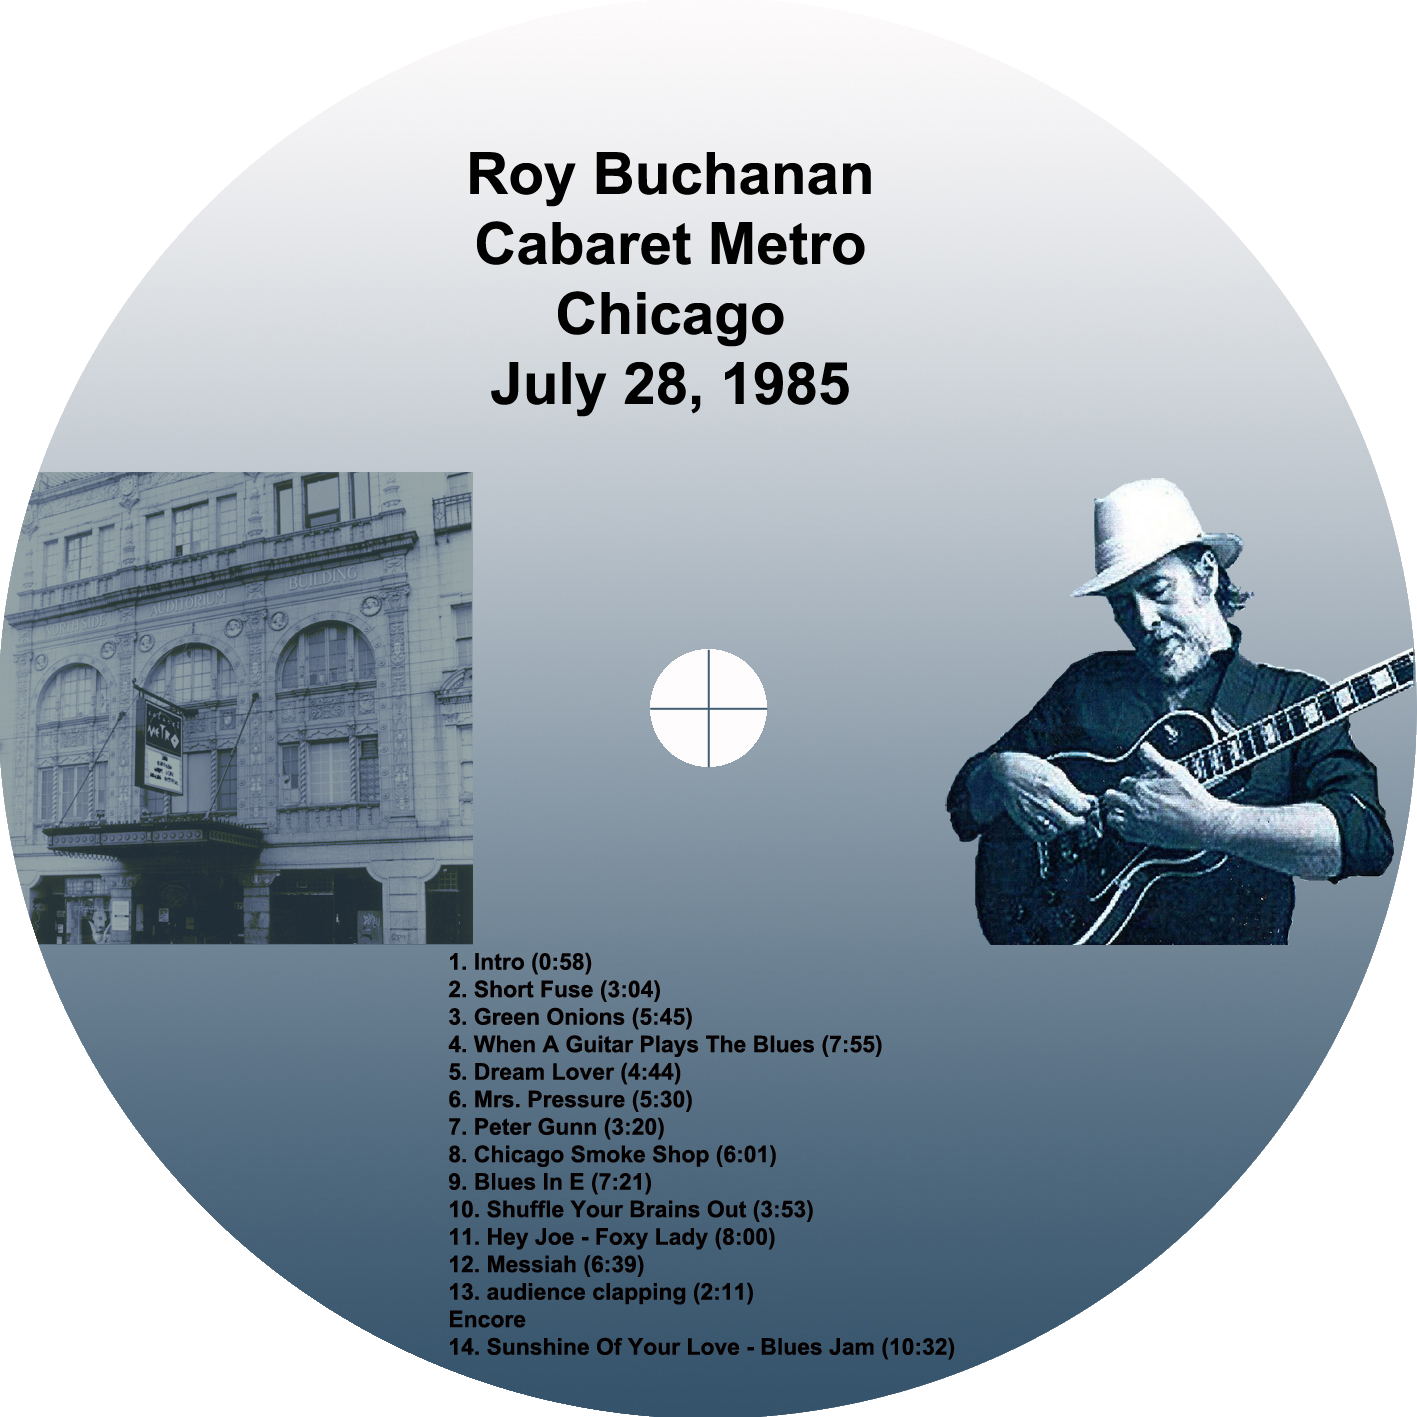 roy buchanan cdr mcd cabaret metro chicago july 28, 1985 label